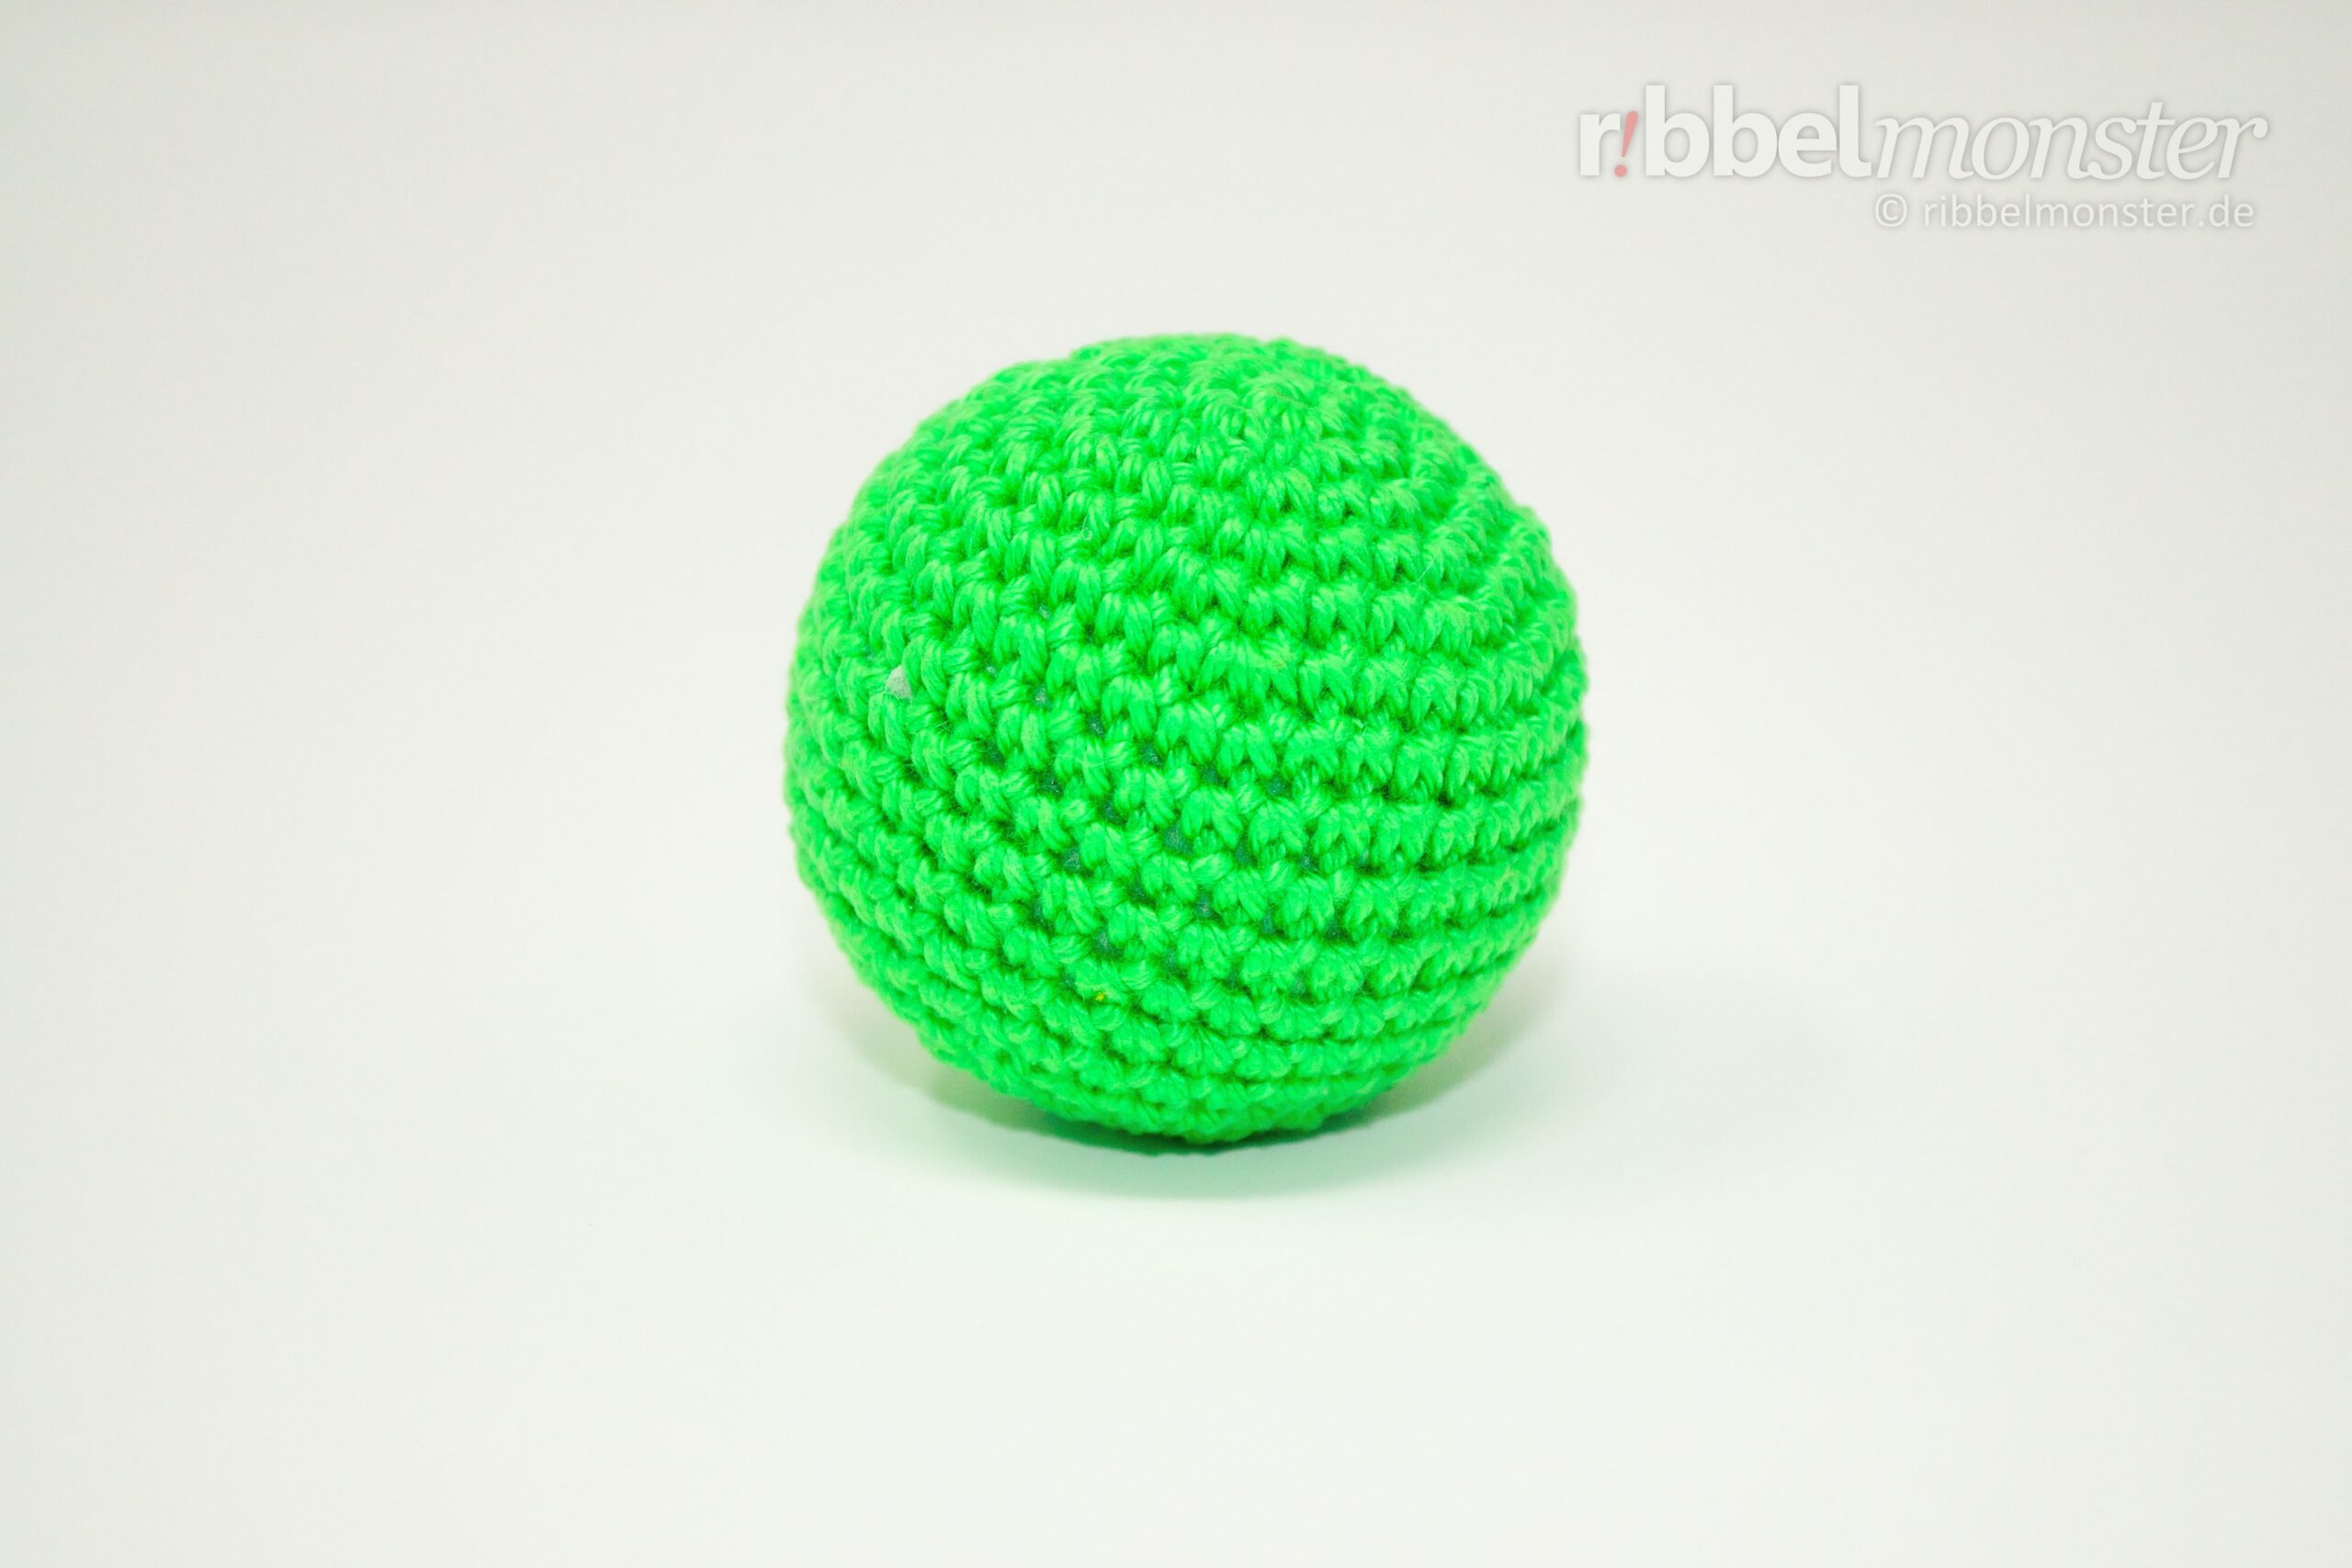 Amigurumi – Crochet Simple Small Ball